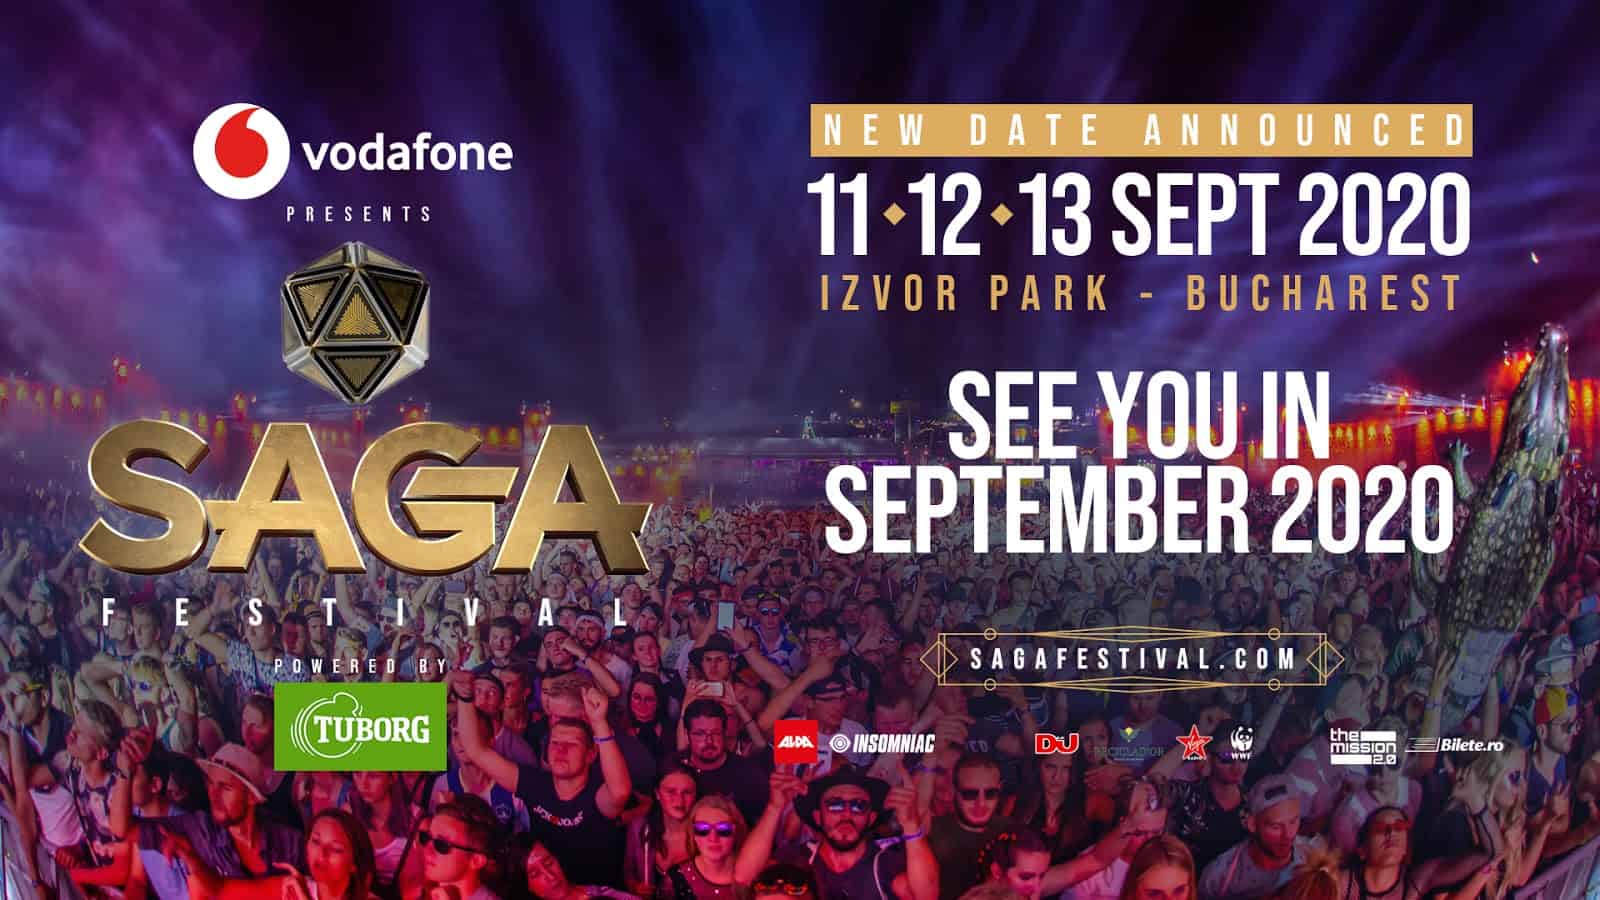 SAGA Festival is officially postponed until September